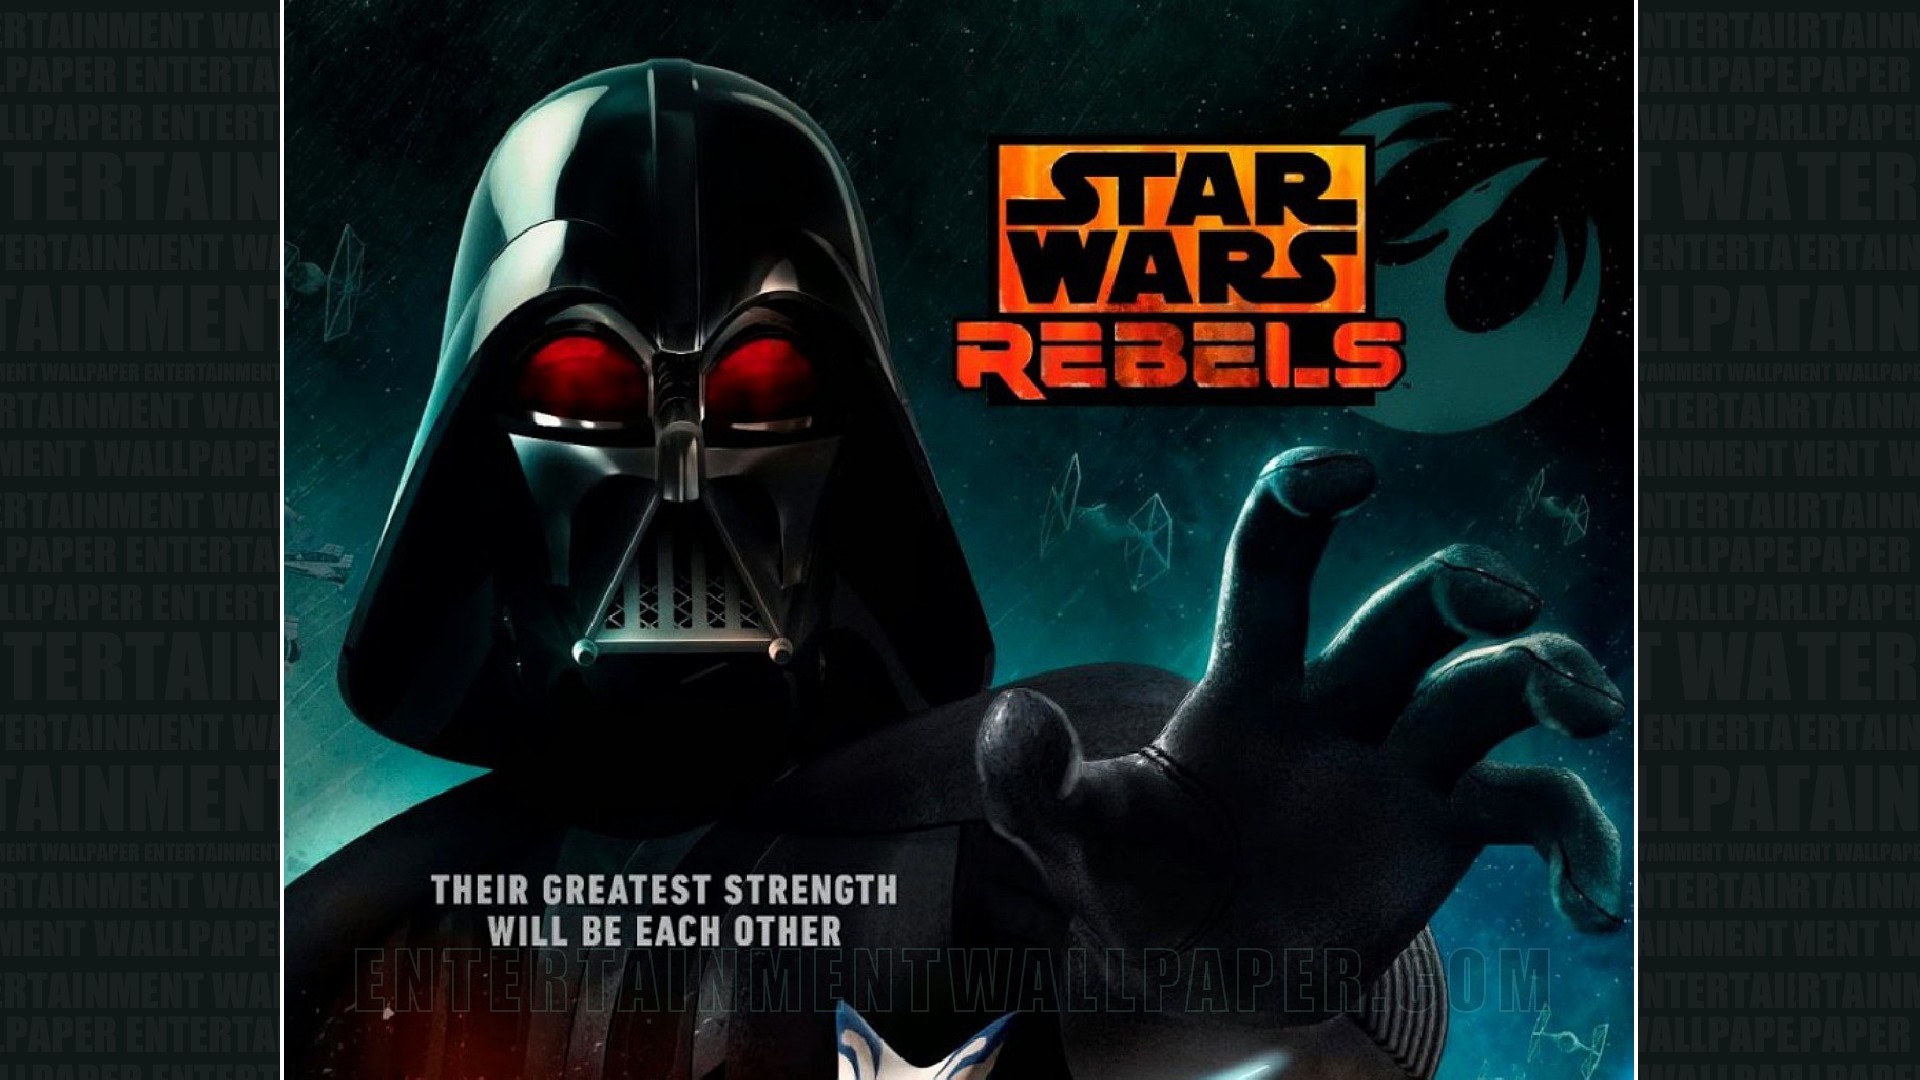 Star Wars Rebels Wallpaper – Original size, download now.